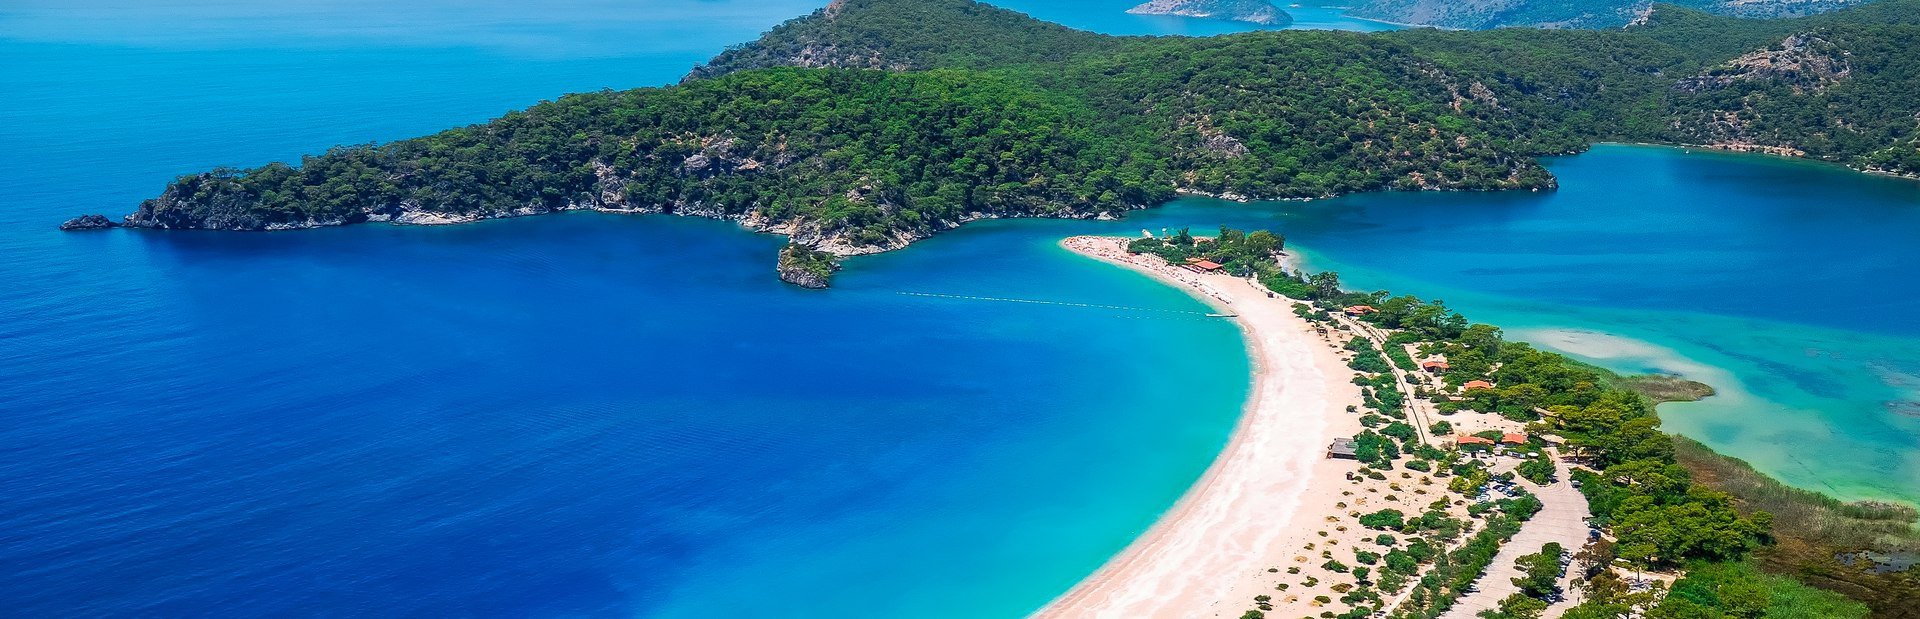 Turkey's best beaches with blue flag